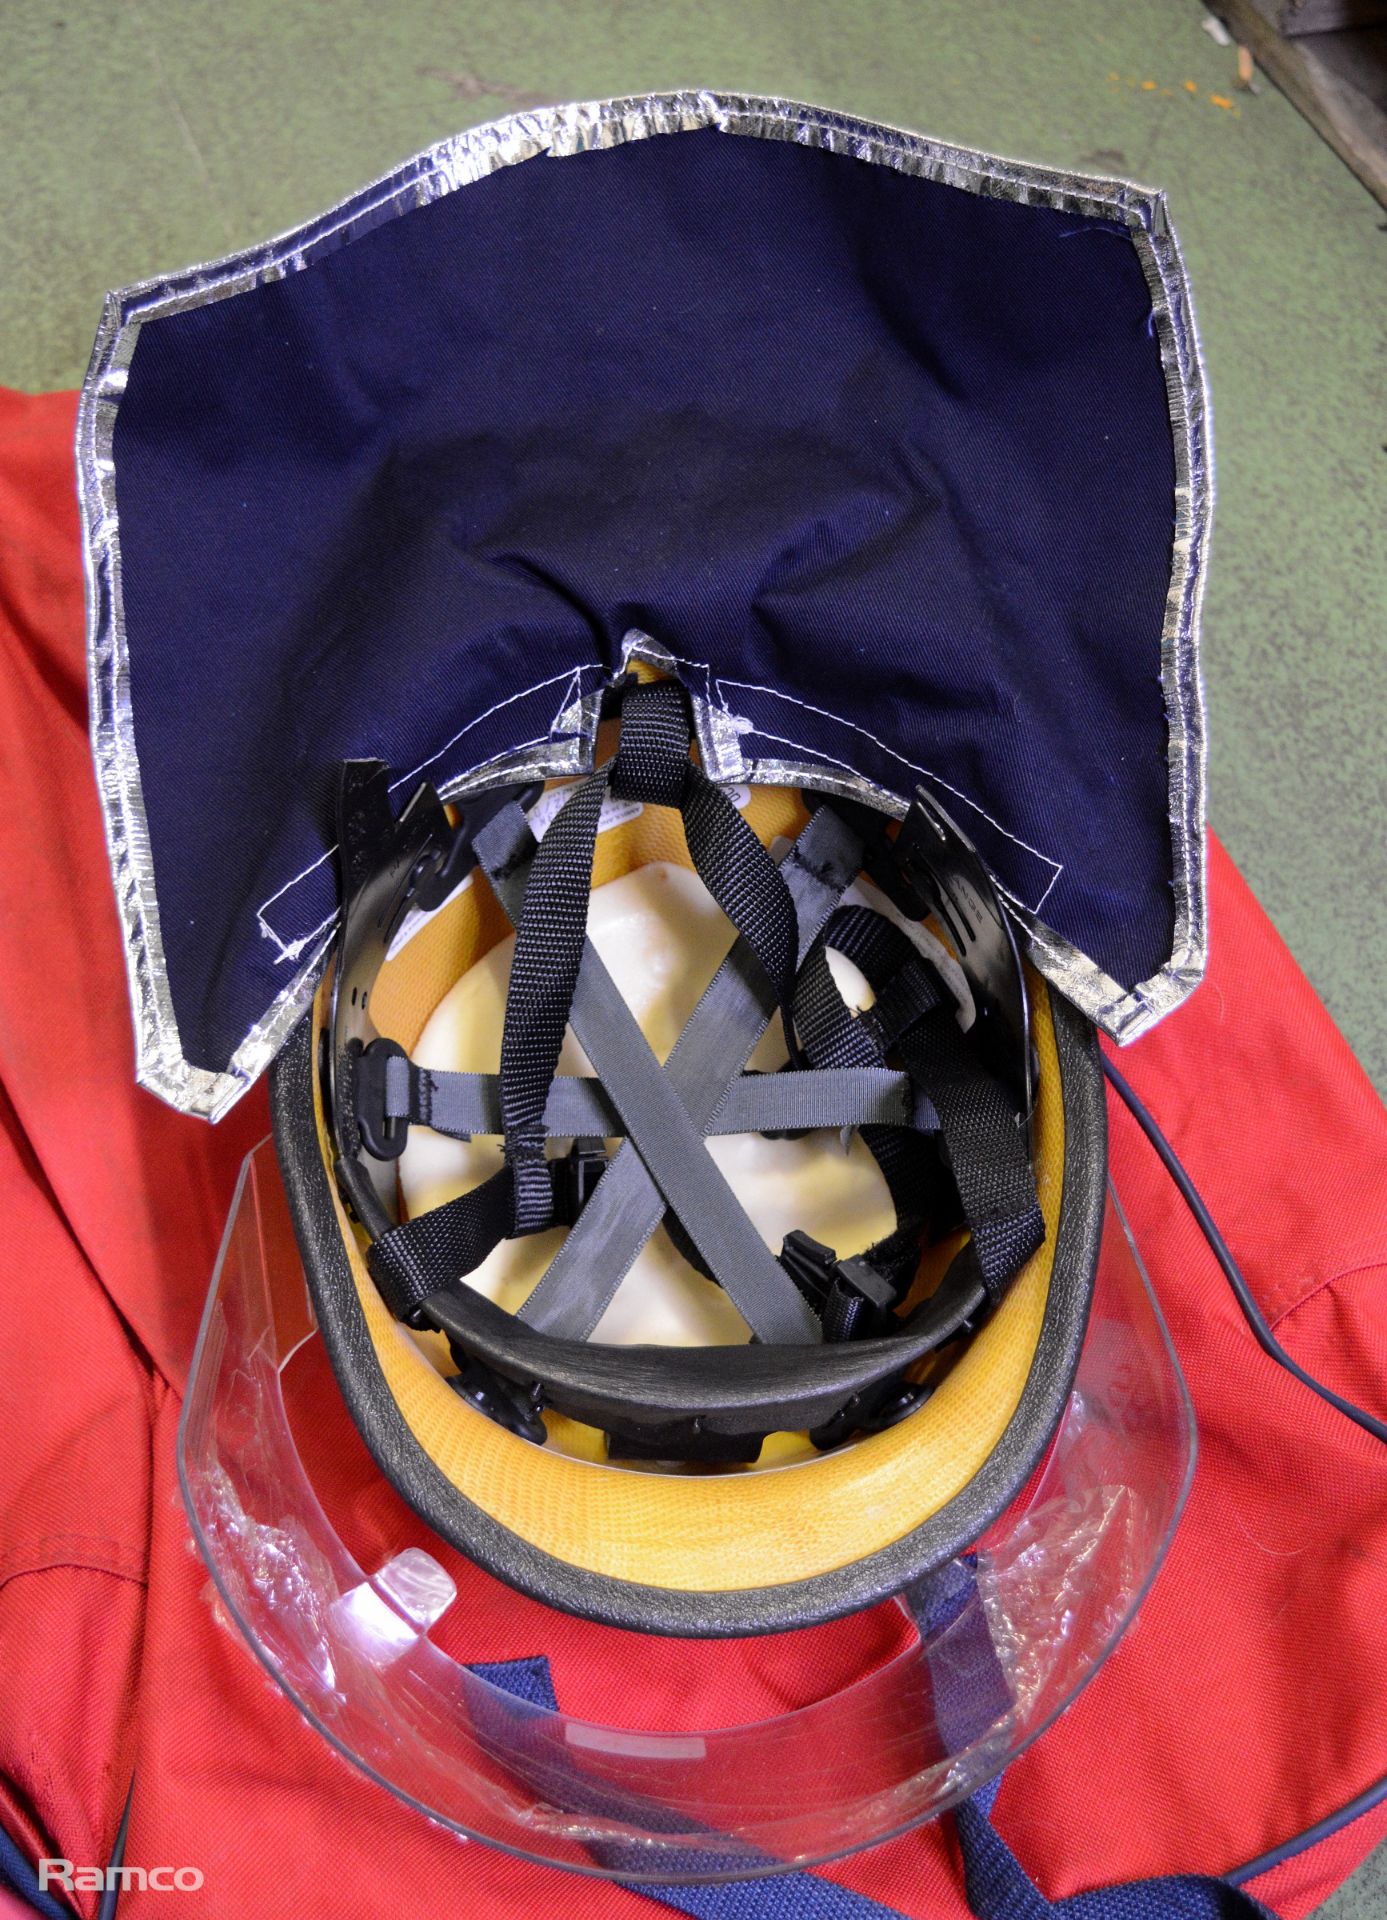 Firefighter equipment - Helmet & Wellington boots (size 10) - Image 5 of 8